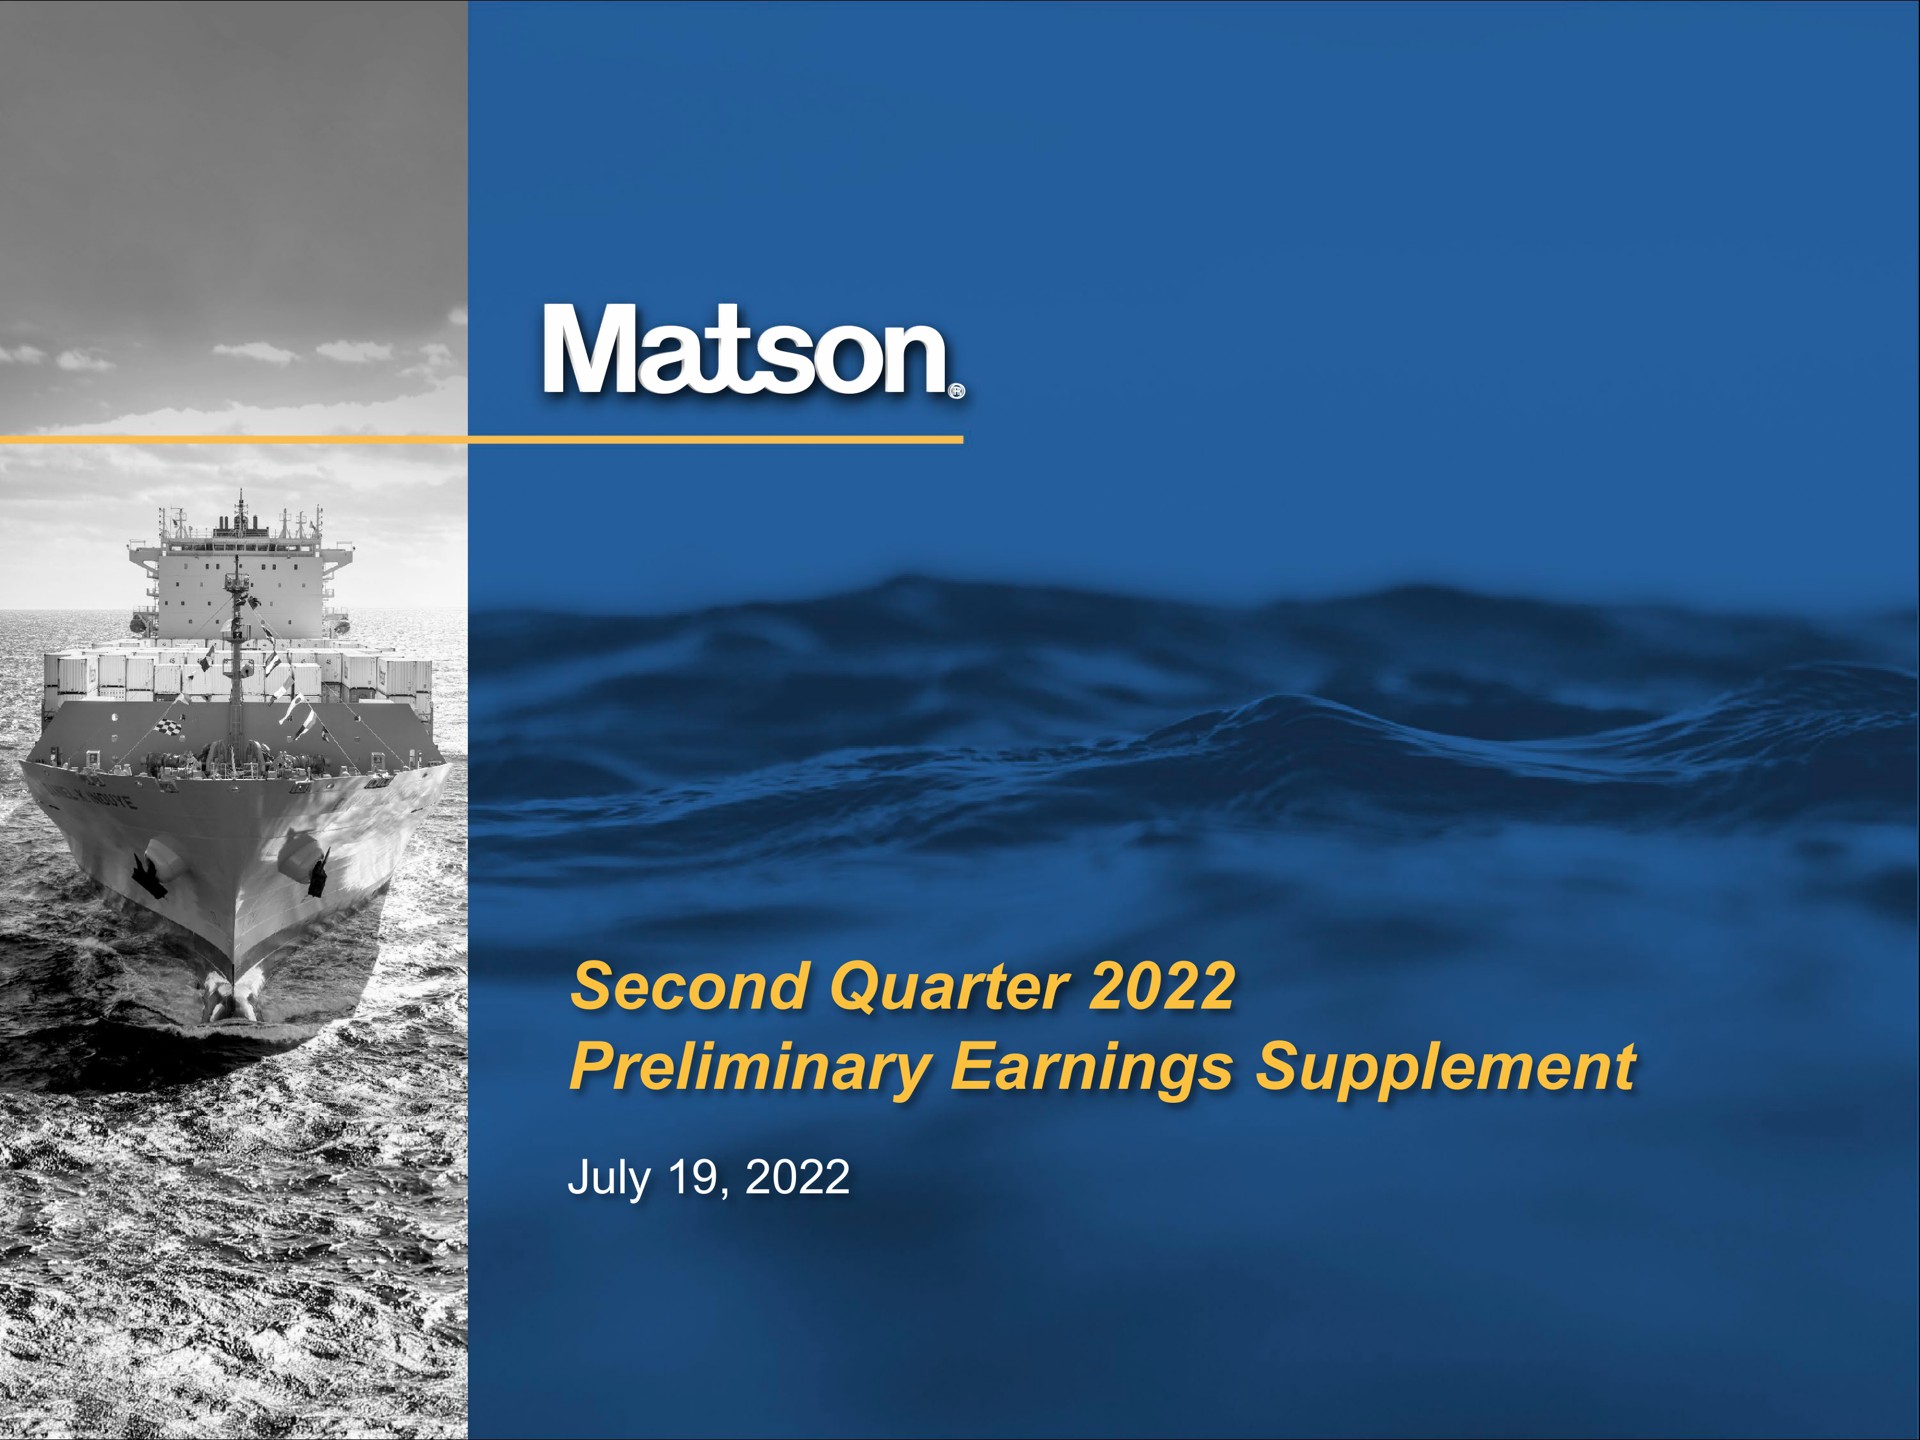 second quarter preliminary earnings supplement | Matson